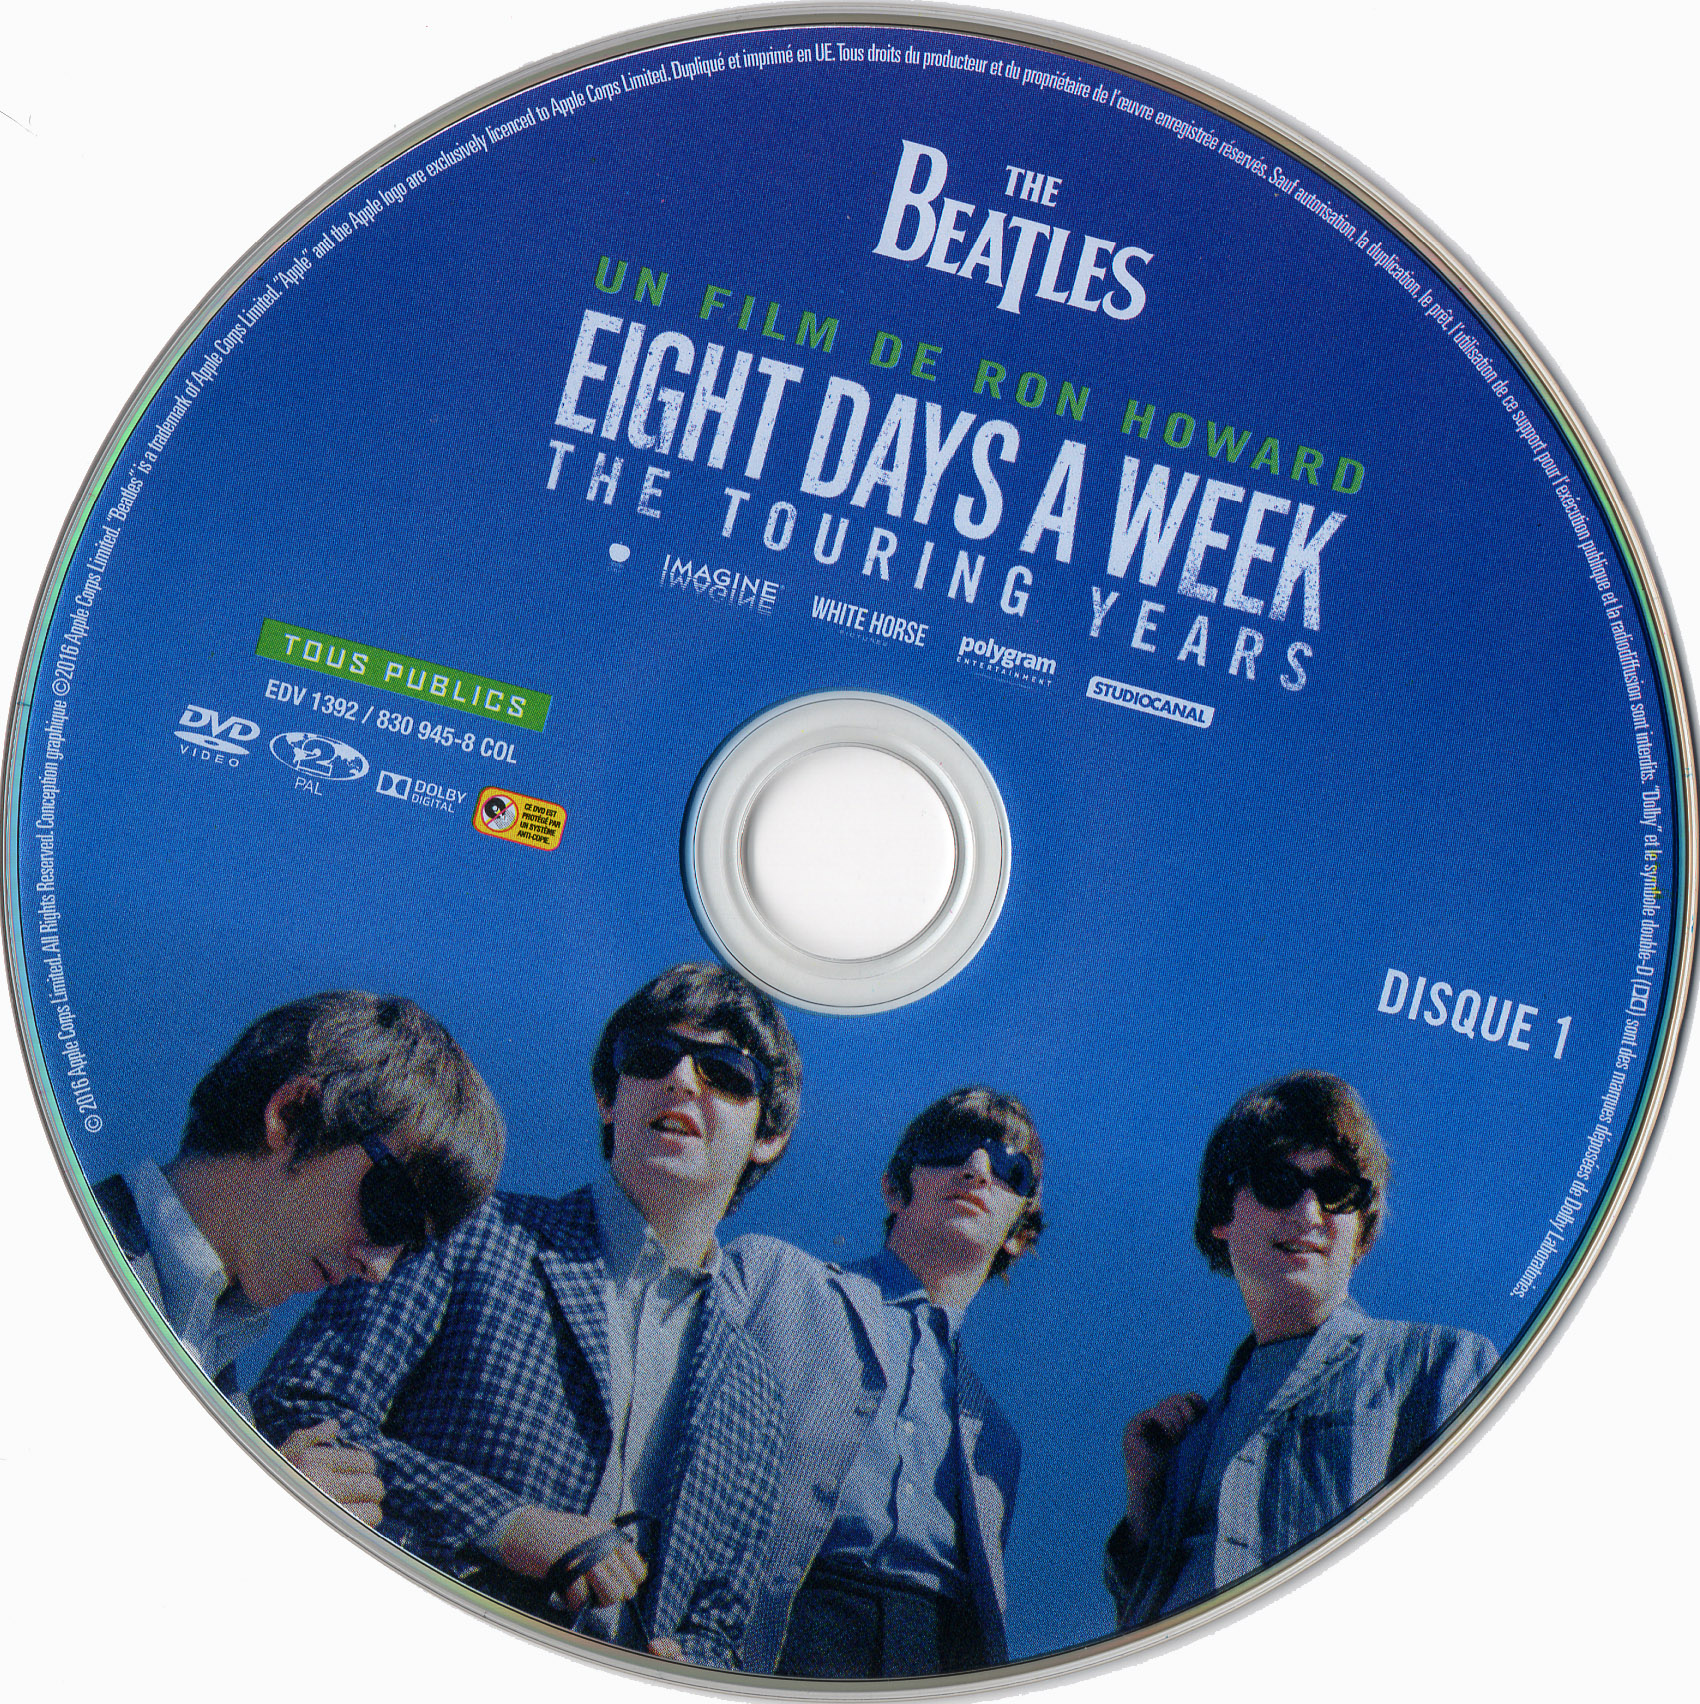 The Beatles Eight days a week DISC 1